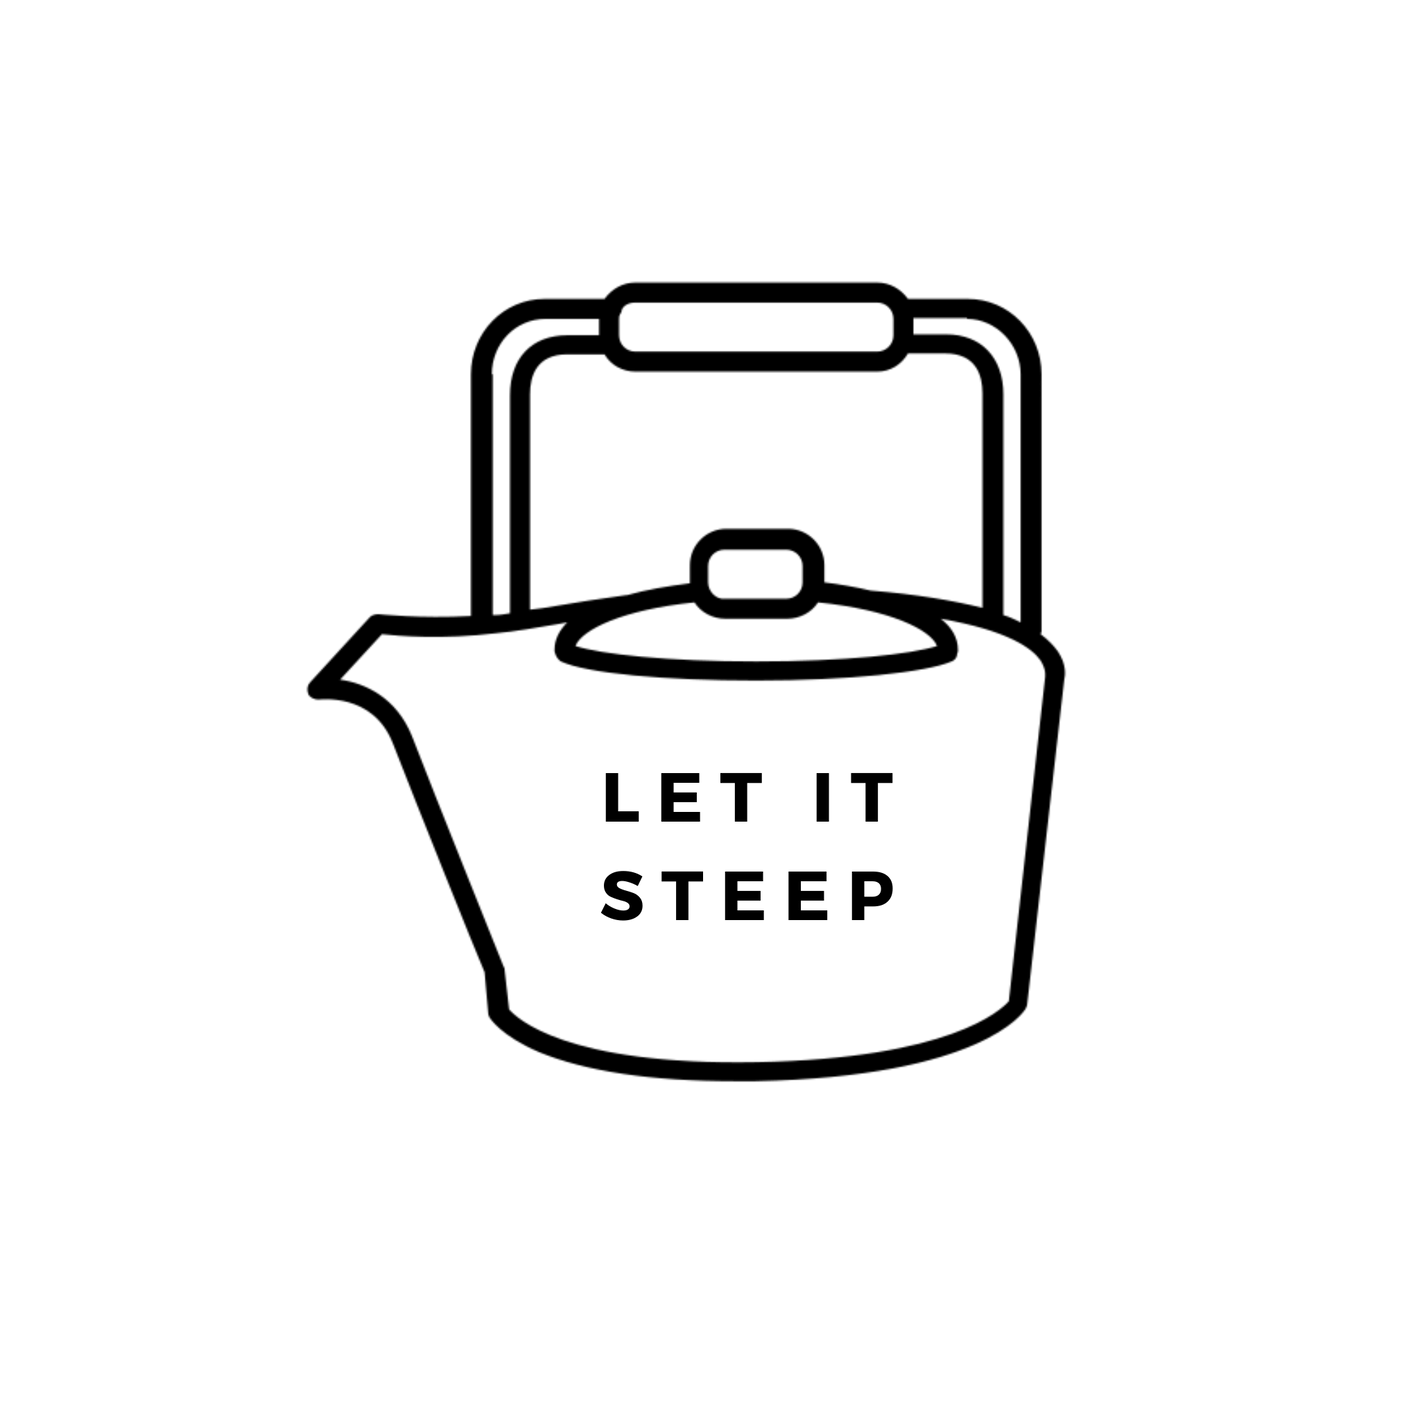 transparent black icon of a teapot